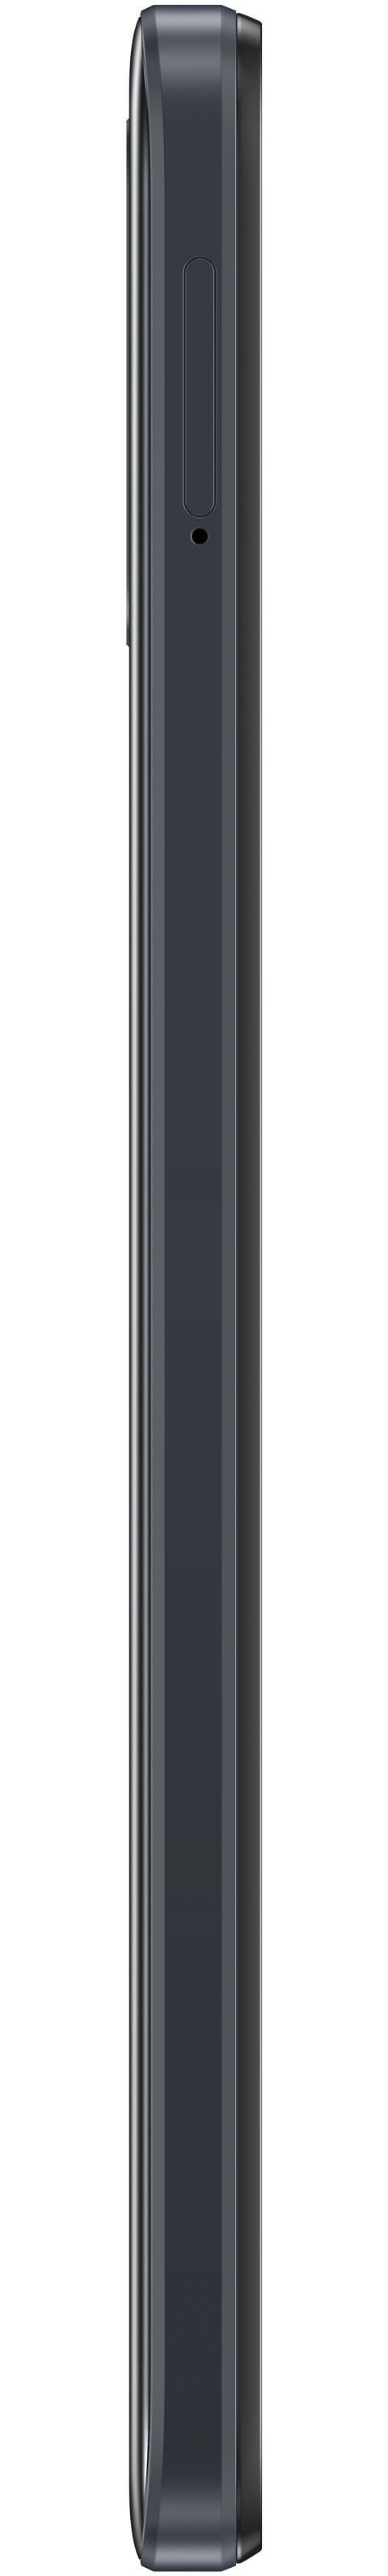 MP Speicherplatz, cm/6,52 Zoll, 13 Motorola GB schwarz Smartphone Kamera) (16,56 E13 64